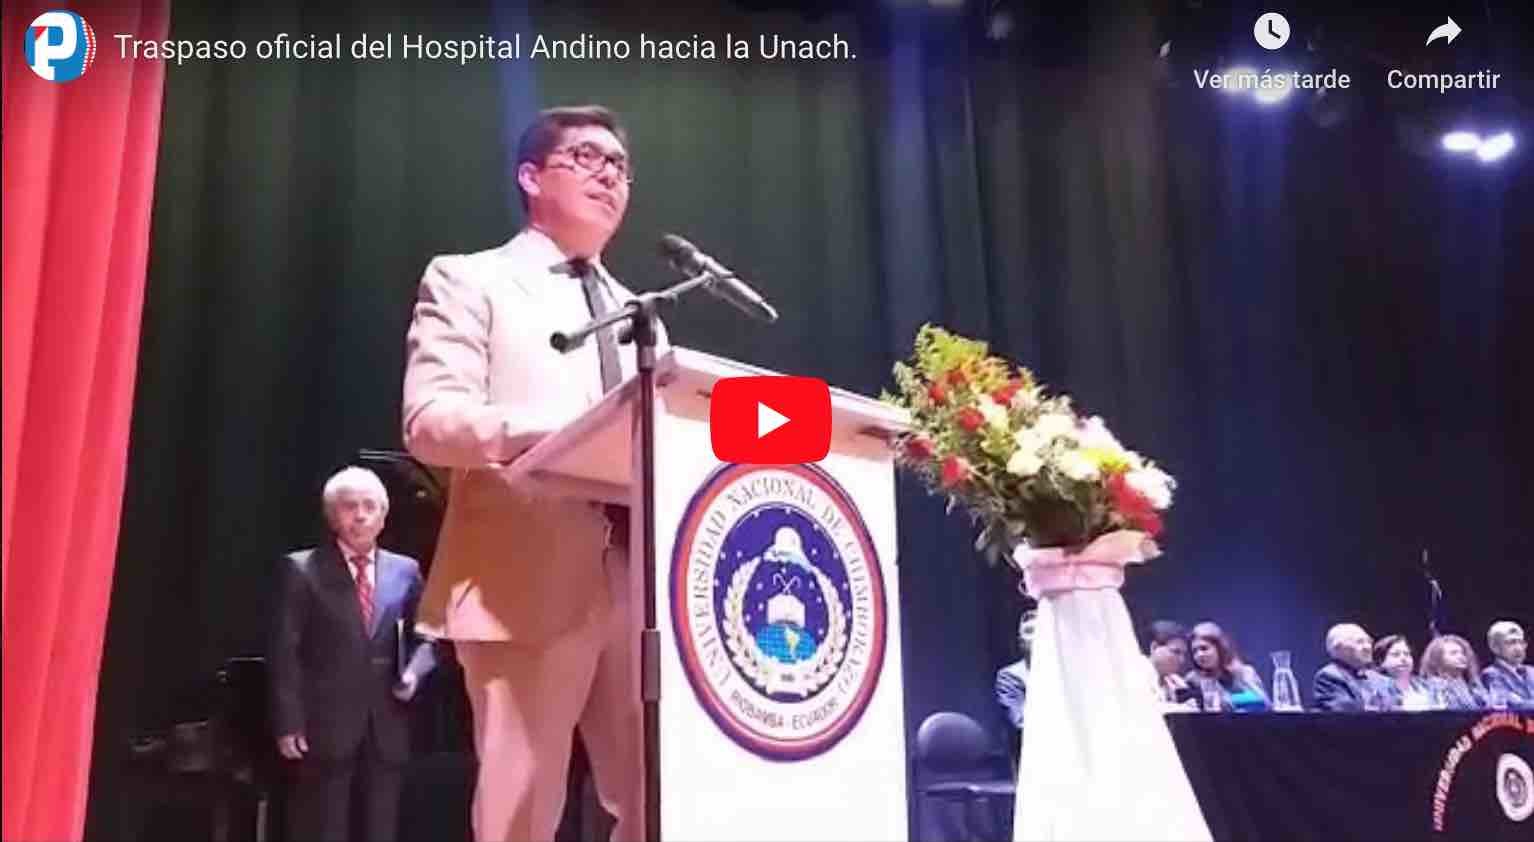 UNACH hospital andino